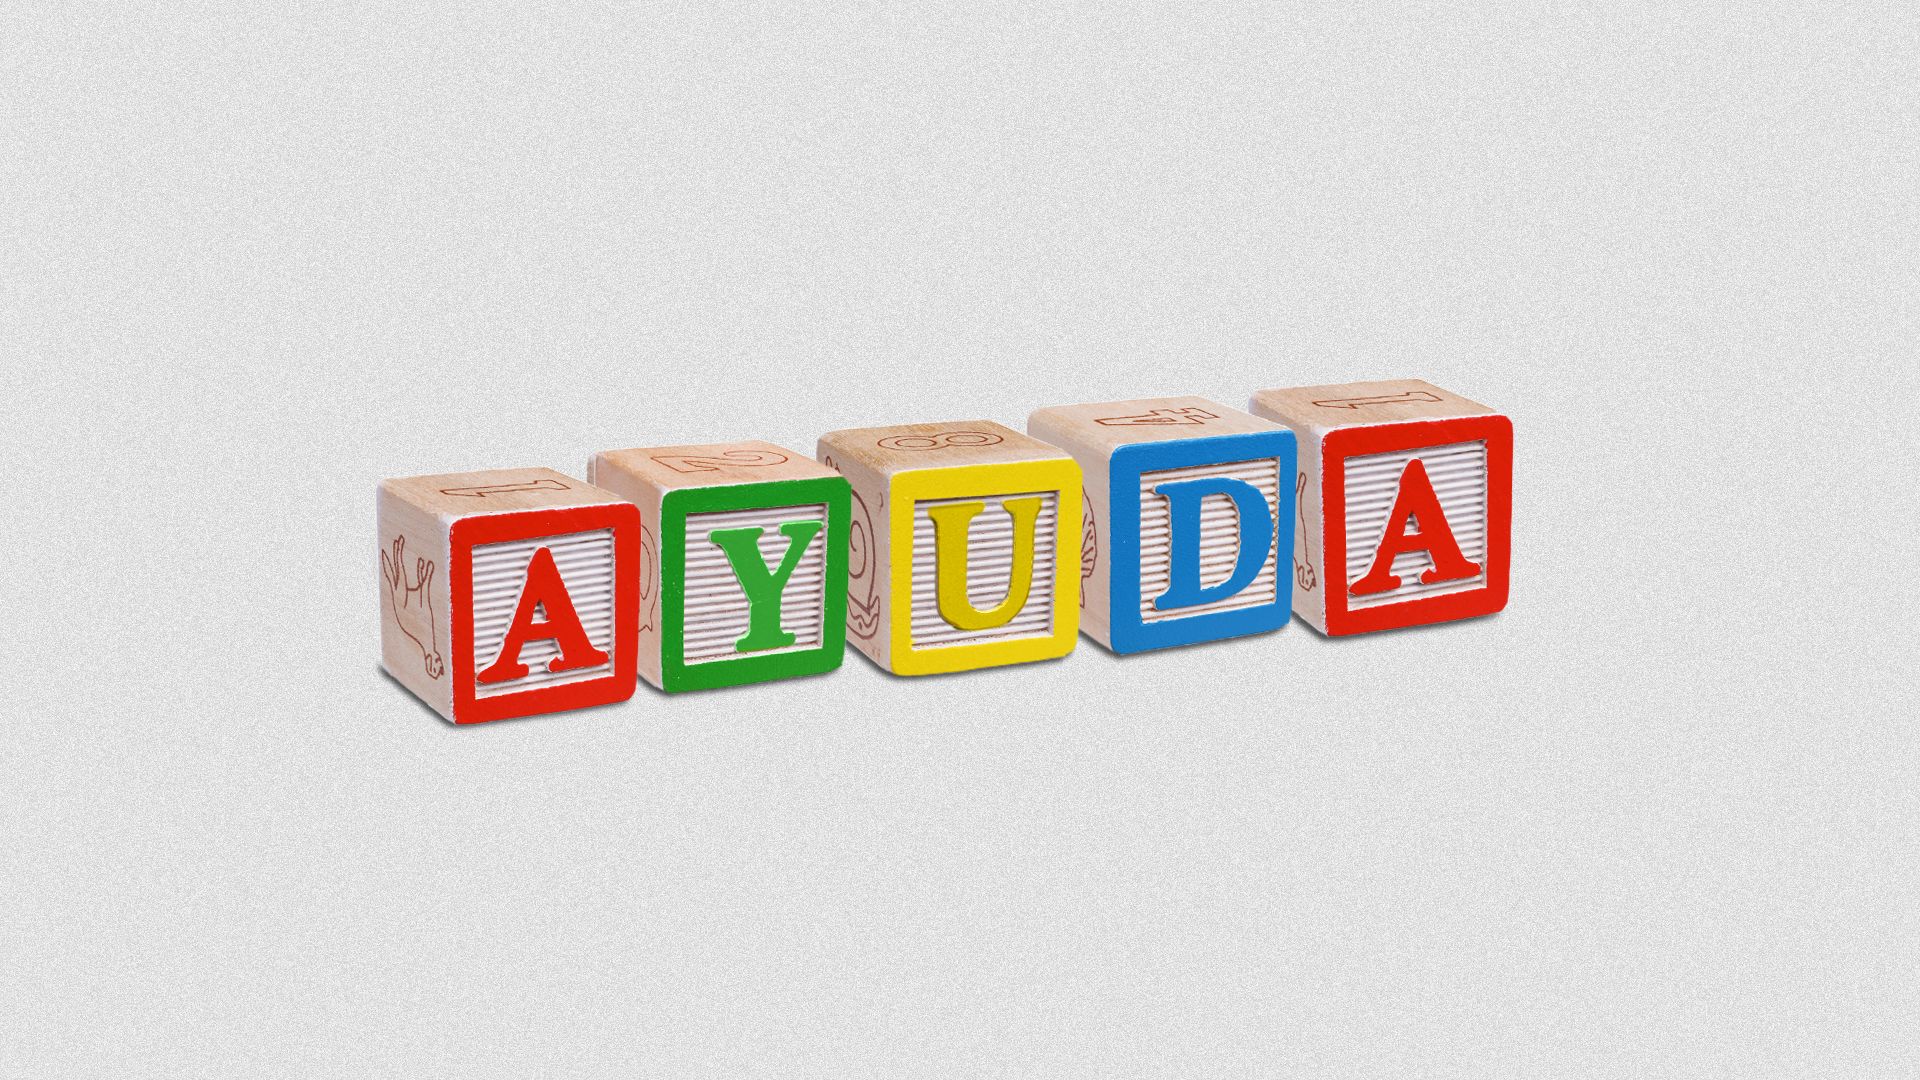 Illustration of children's toy blocks spelling out, "AYUDA".